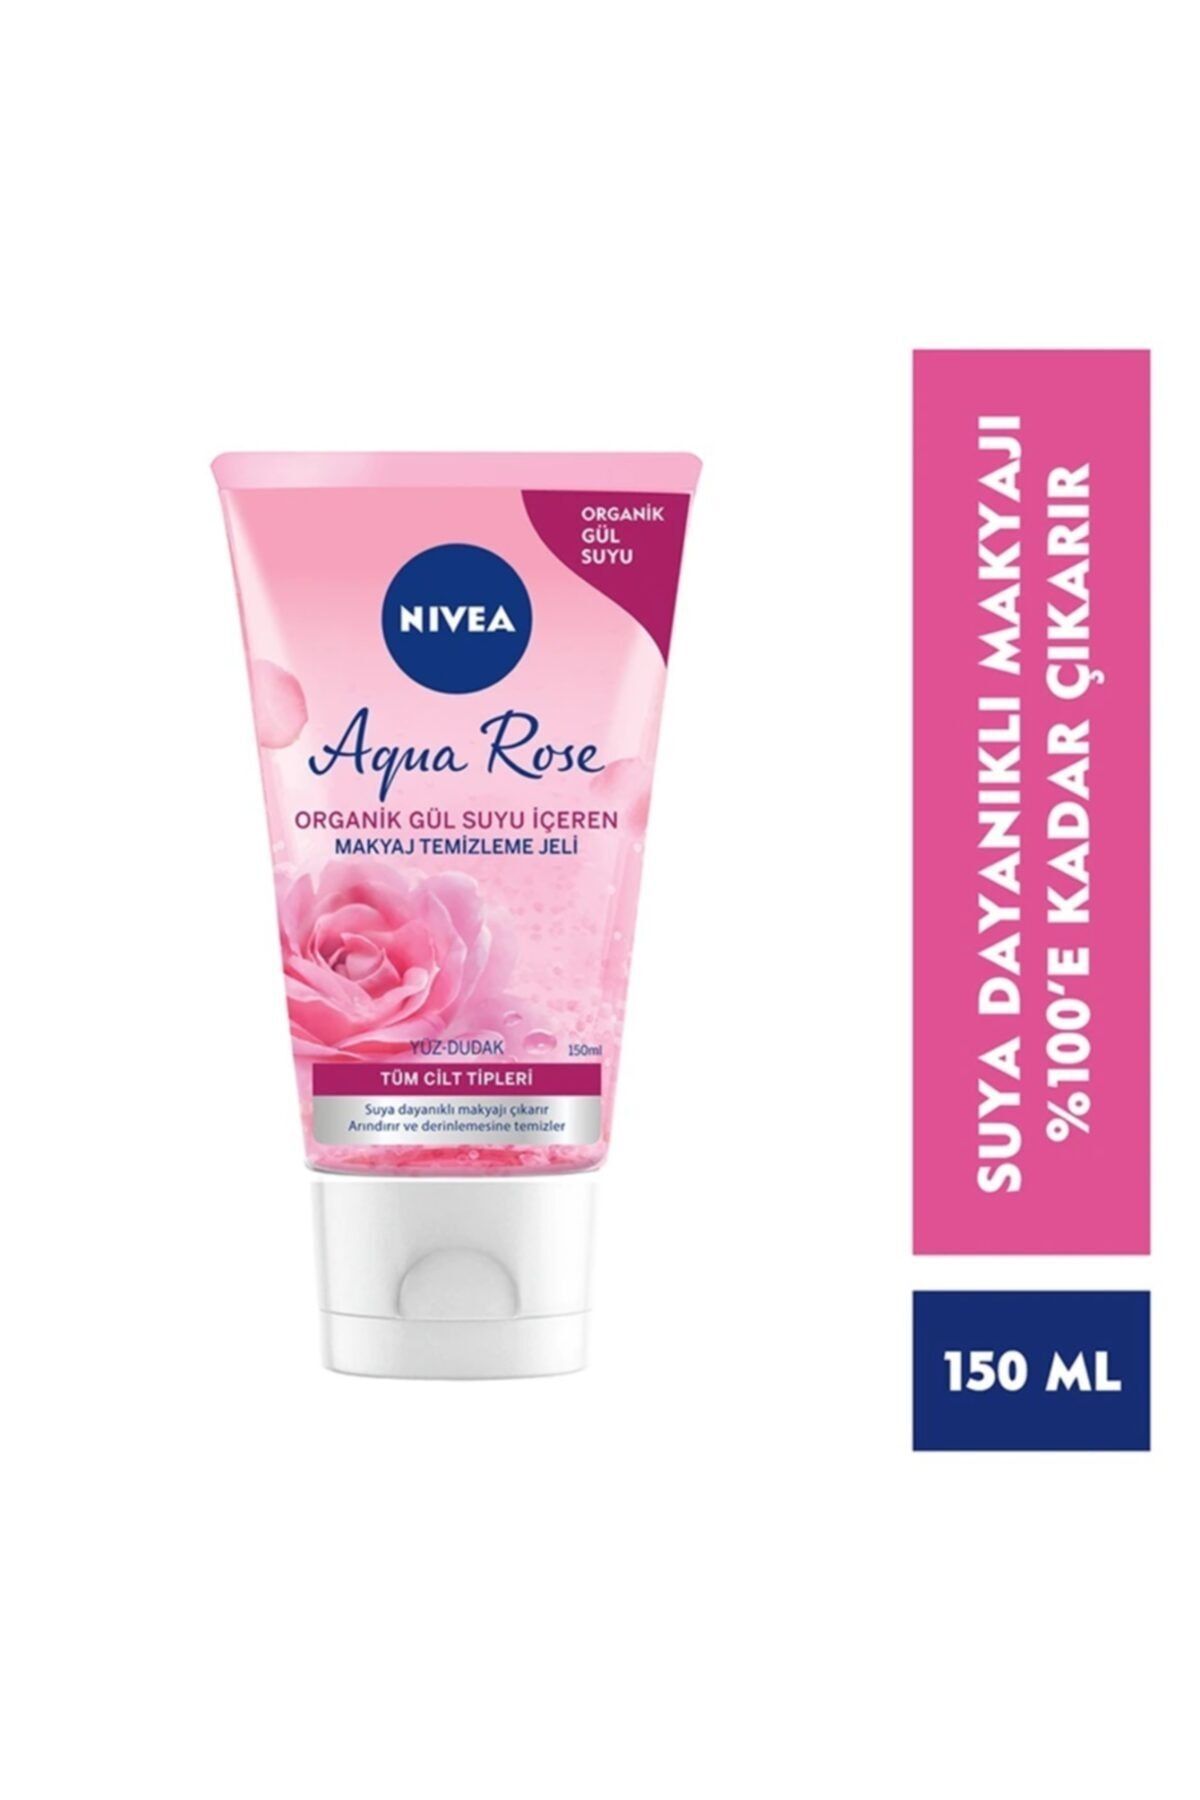 NIVEA Aqua Rose Organik Gül Suyu Içeren Makyaj Temizleme Jeli 150 Ml